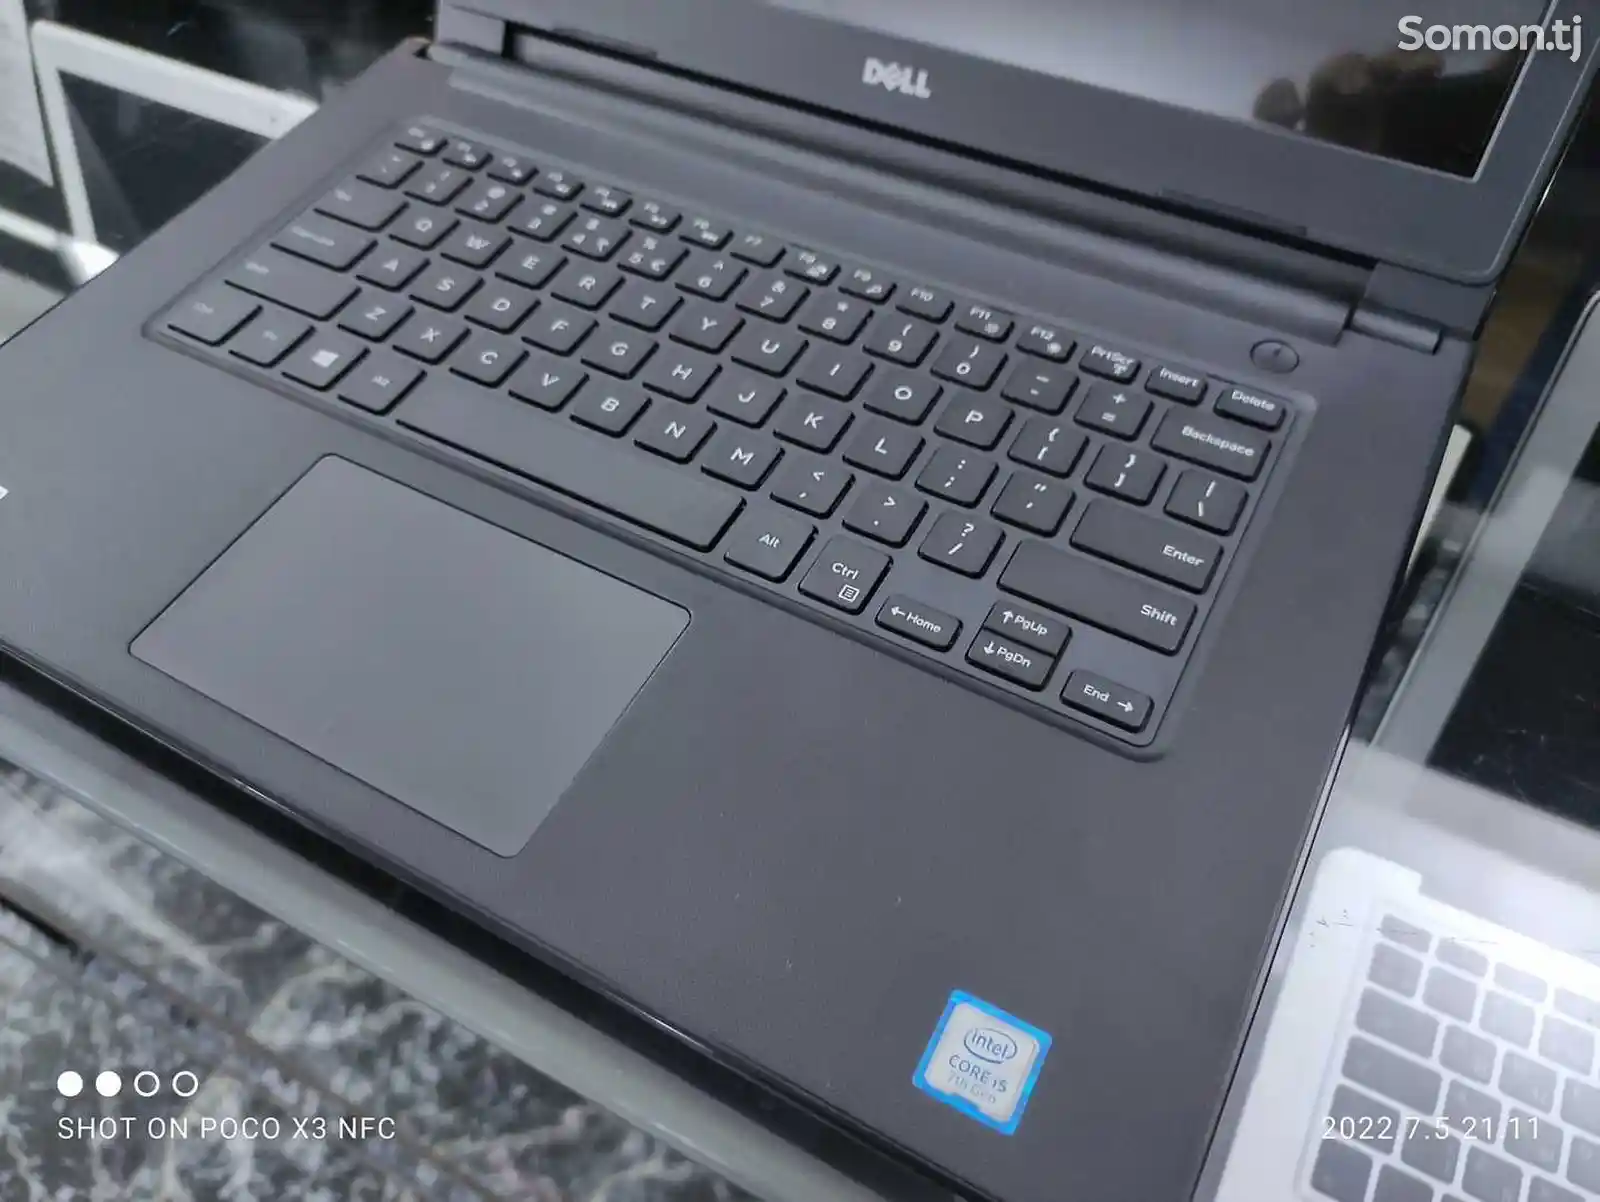 Игровой Ноутбук Dell Inspiron 14-3467 Core i5-7200U 4GB/500GB 7TH GEN-5